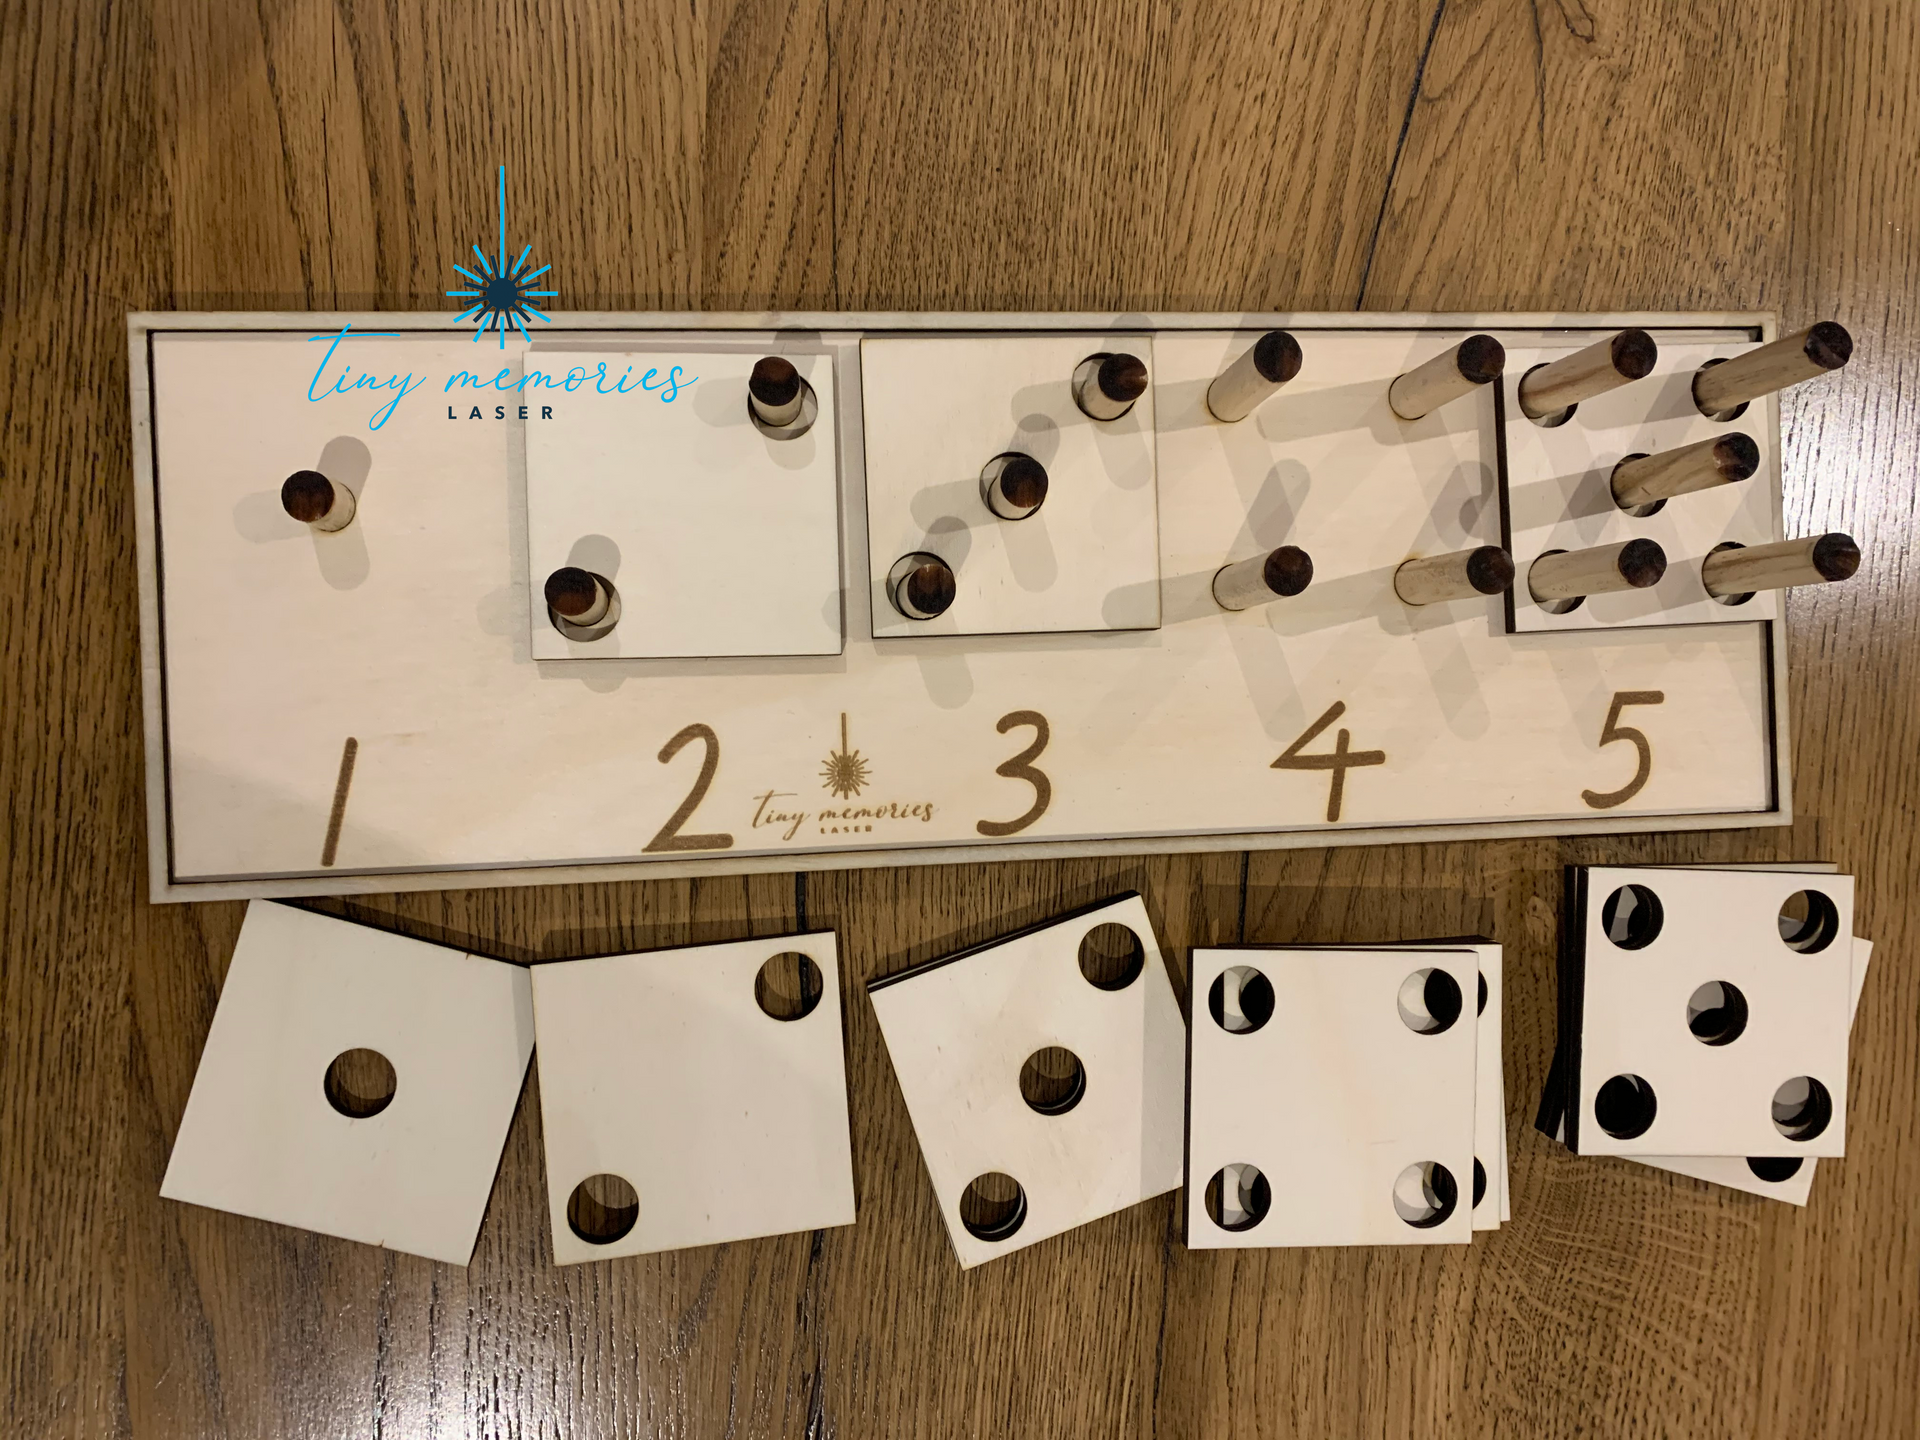 Count 1 - 5 board set - Tiny Memories Laser